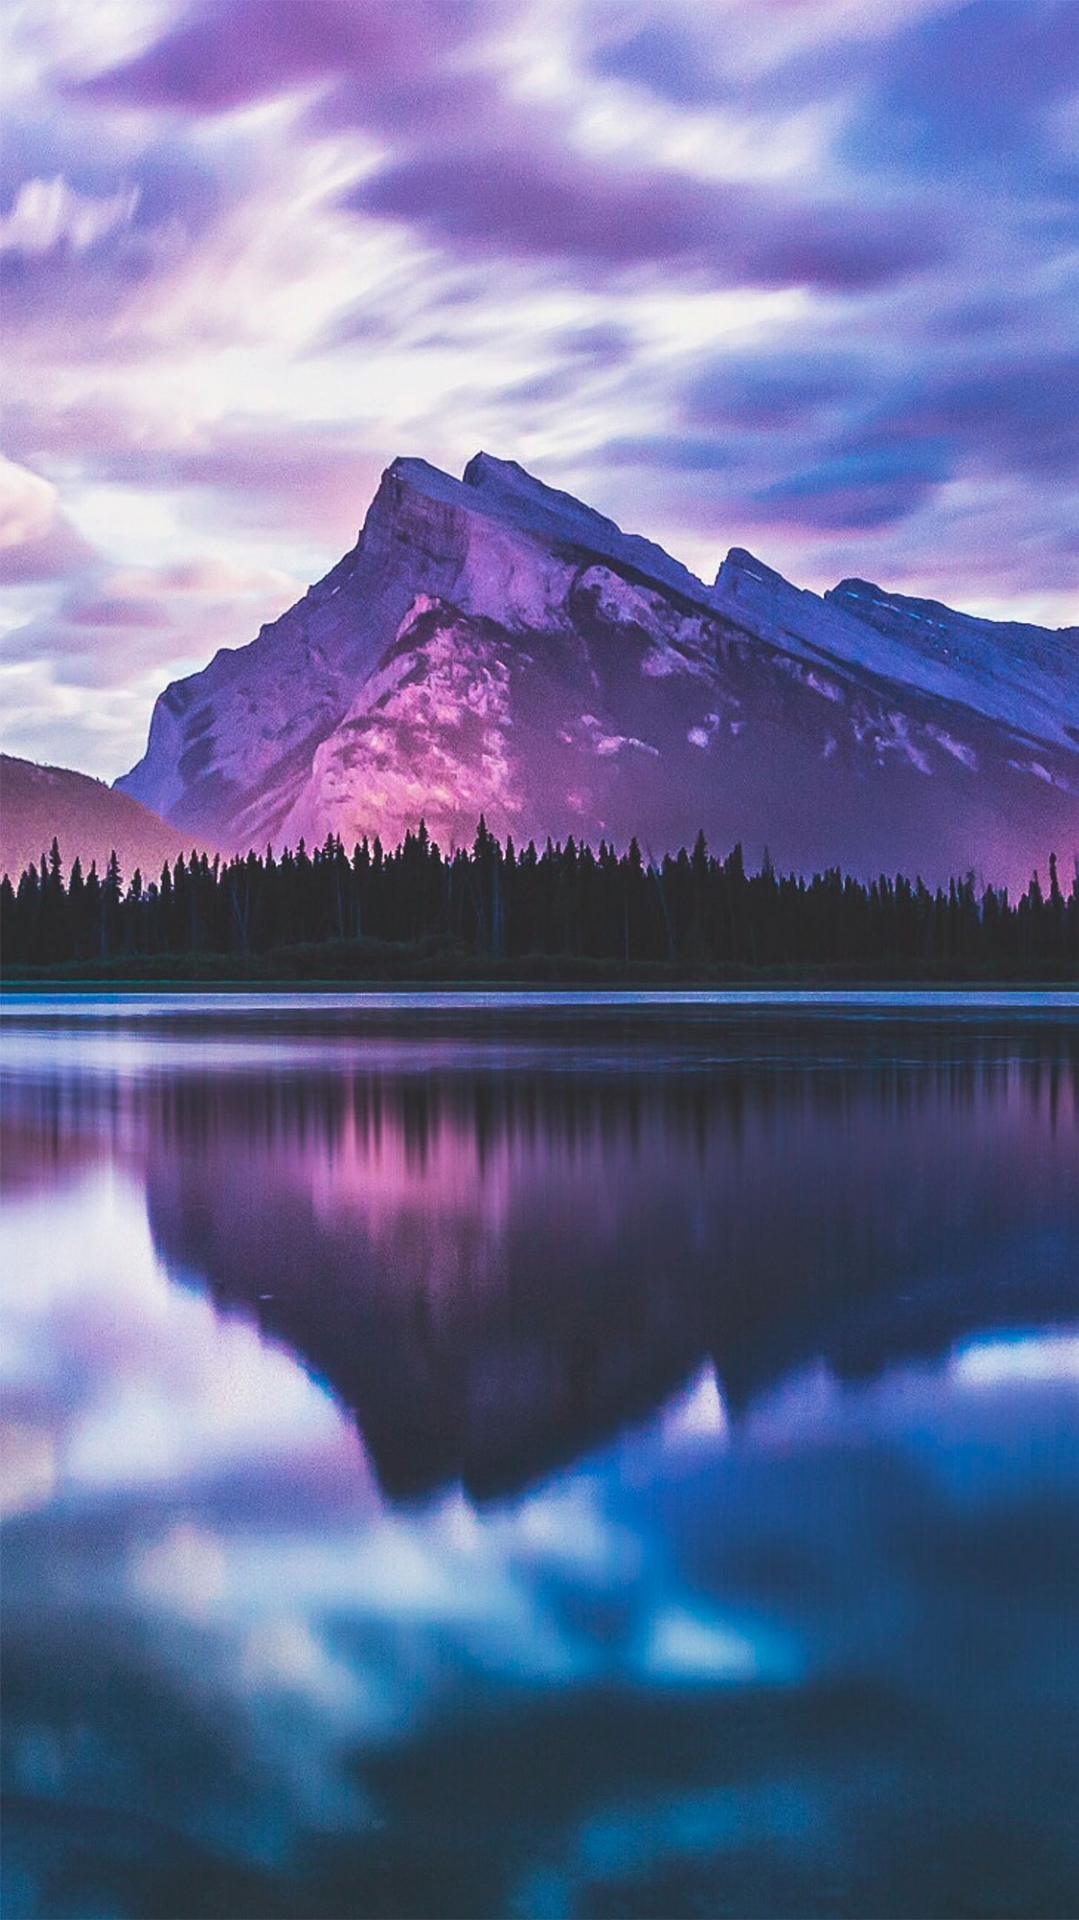 Reflection of sunset in lake Wallpaper 4k Ultra HD ID:11153